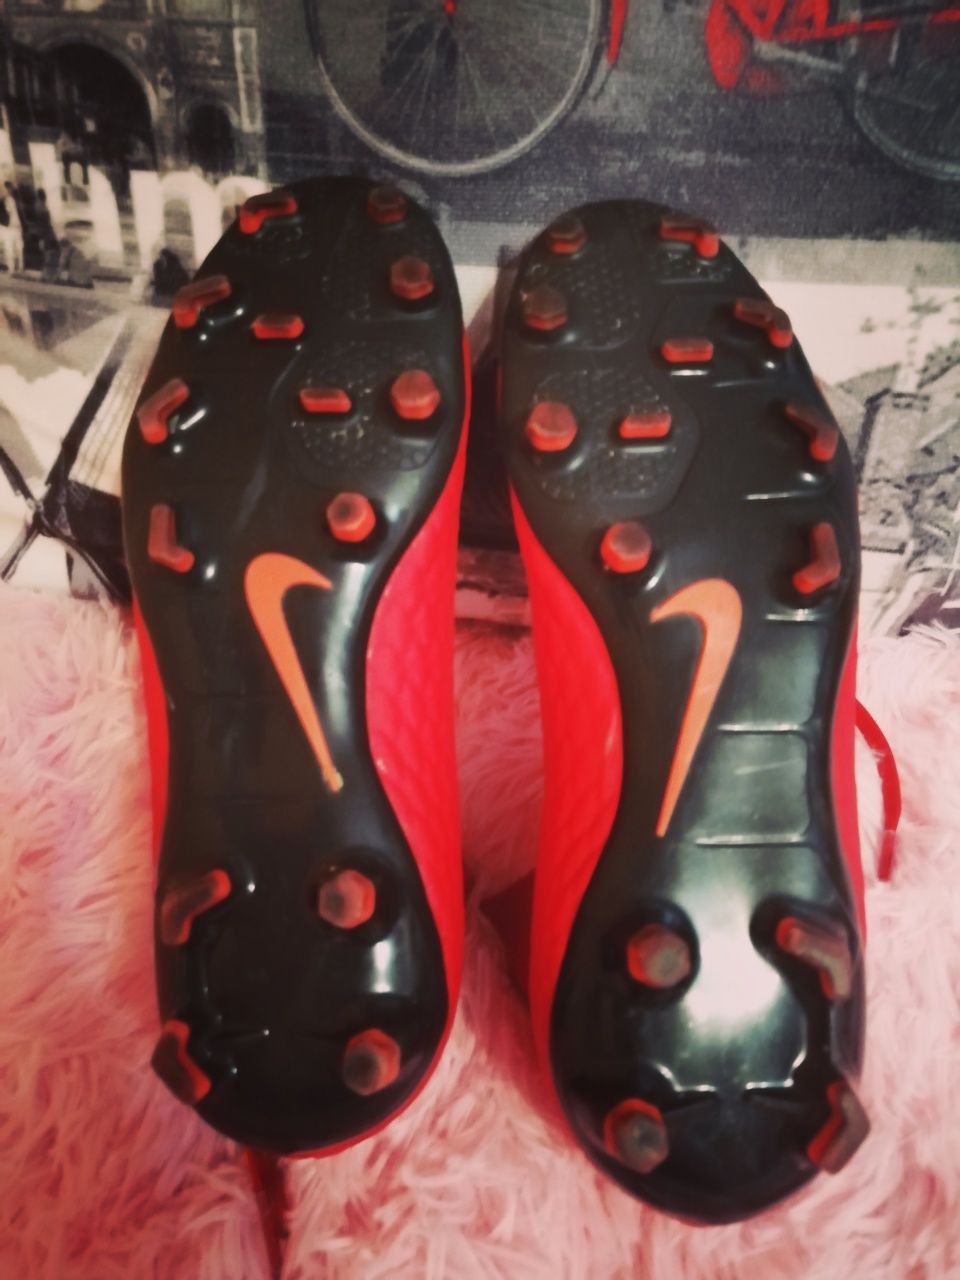 Копочки Nike Skin Hypervenom red
- Состояние 11 из 12
- Мо